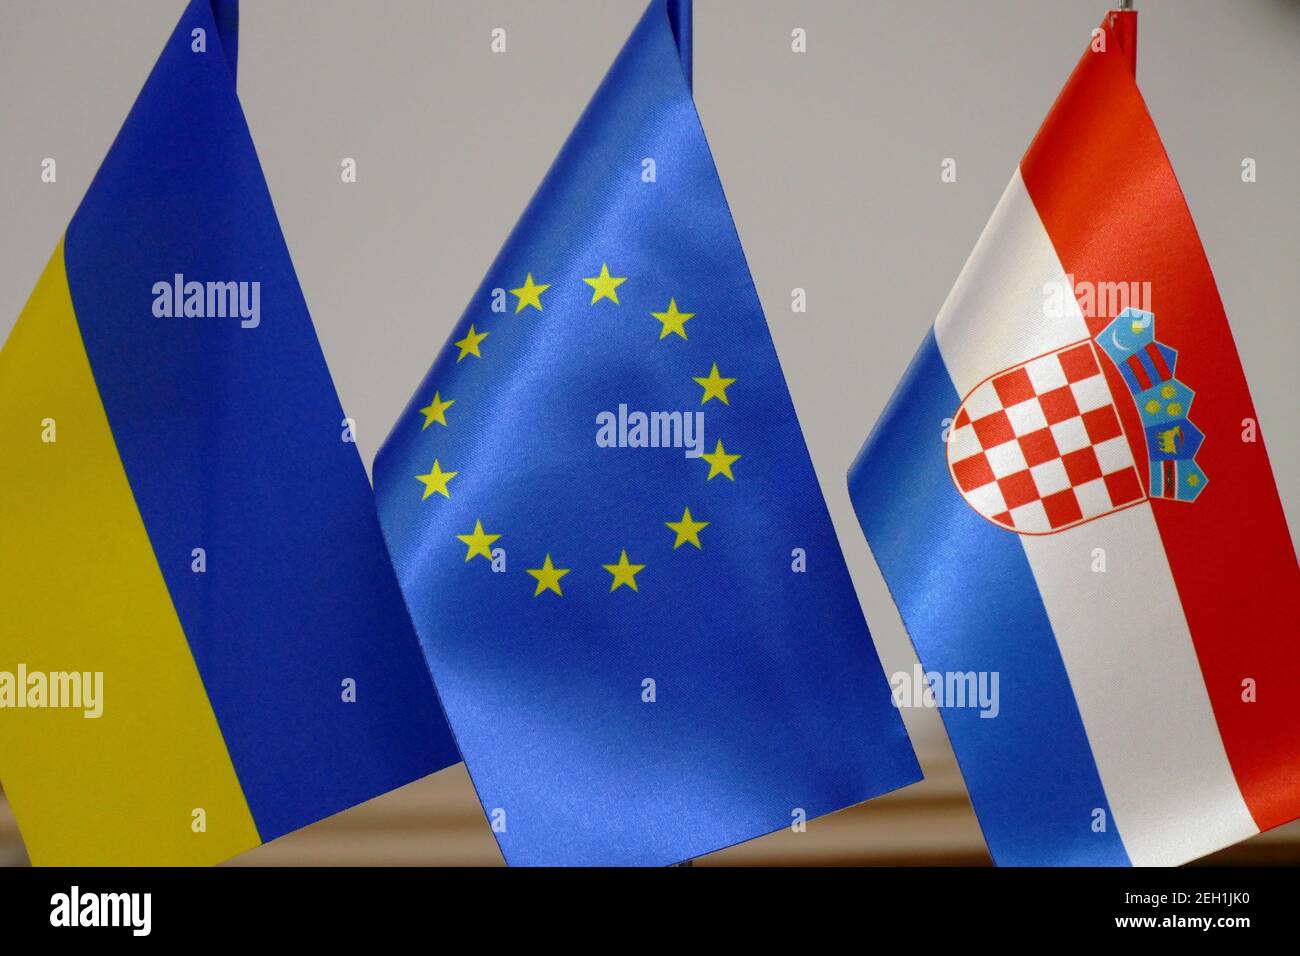 Non Exclusive: IVANO-FRANKIVSK, UKRAINE - FEBRUARY 18, 2021 - The flags of Ukraine, the European Union and the Republic of Croatia (L to R) are pictur Stock Photo